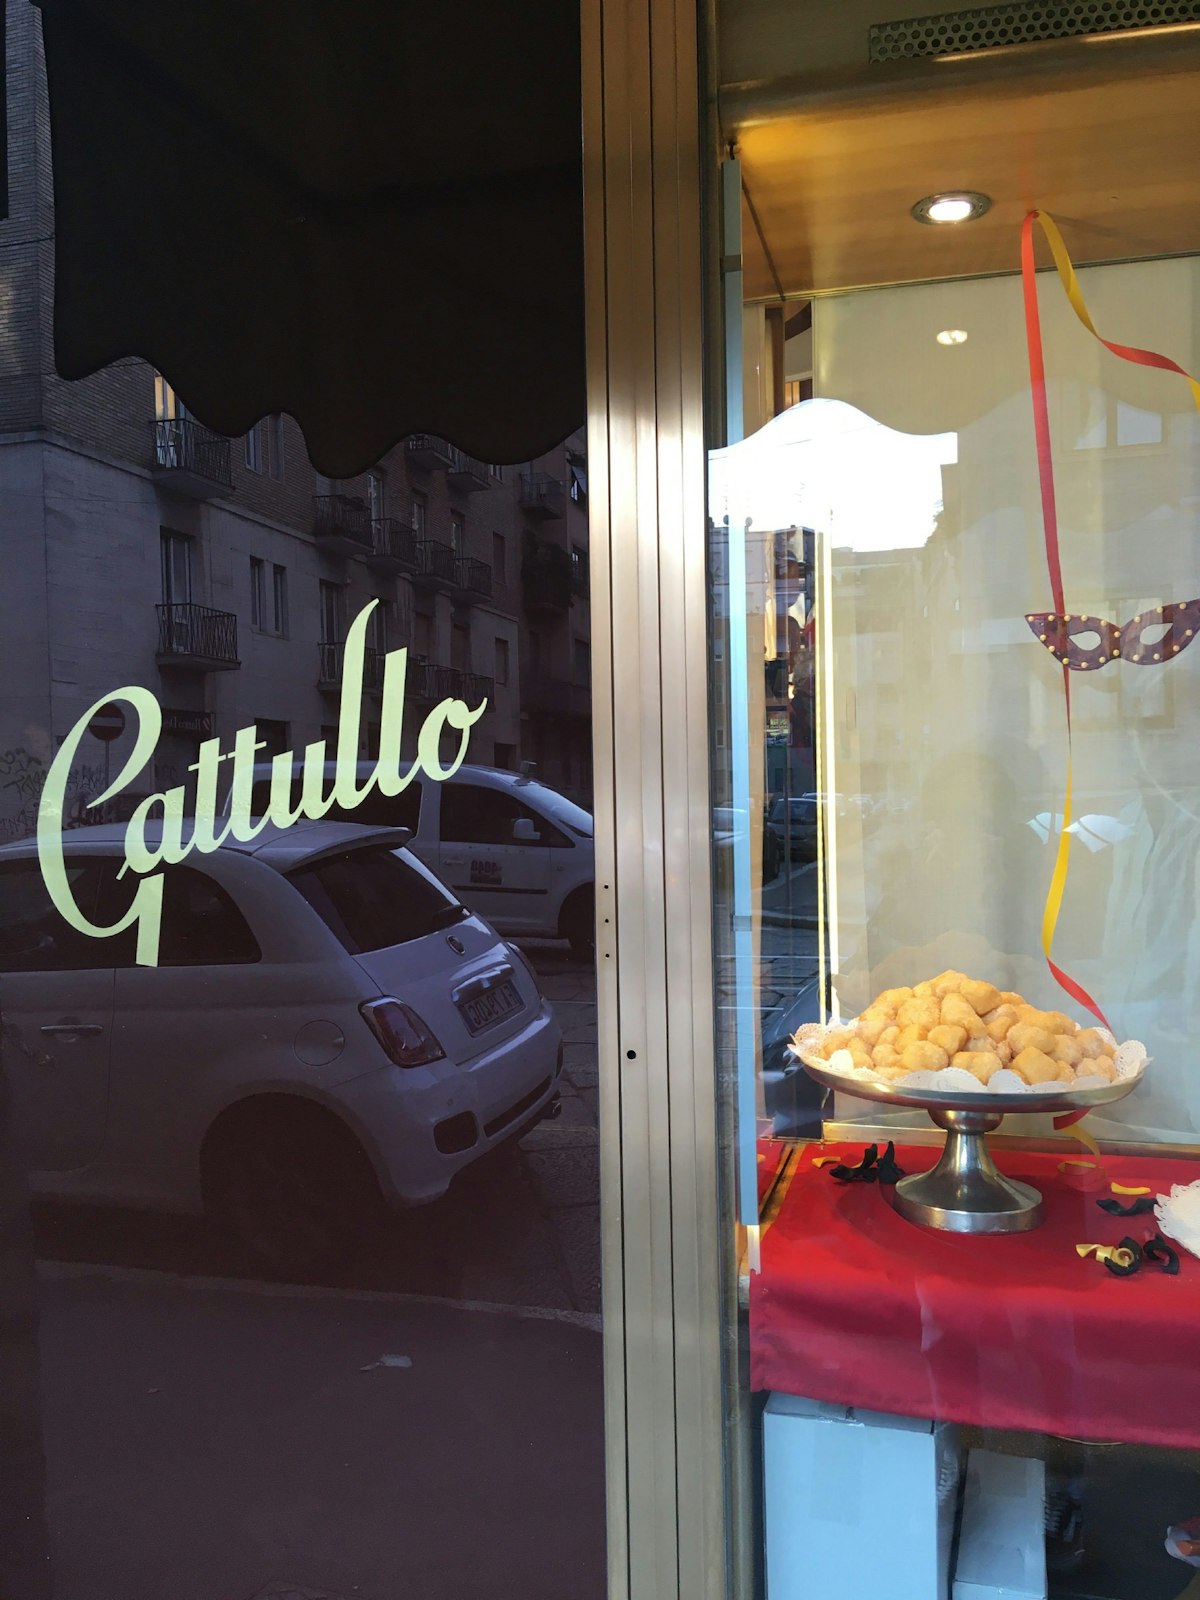 The Gattullo shop window